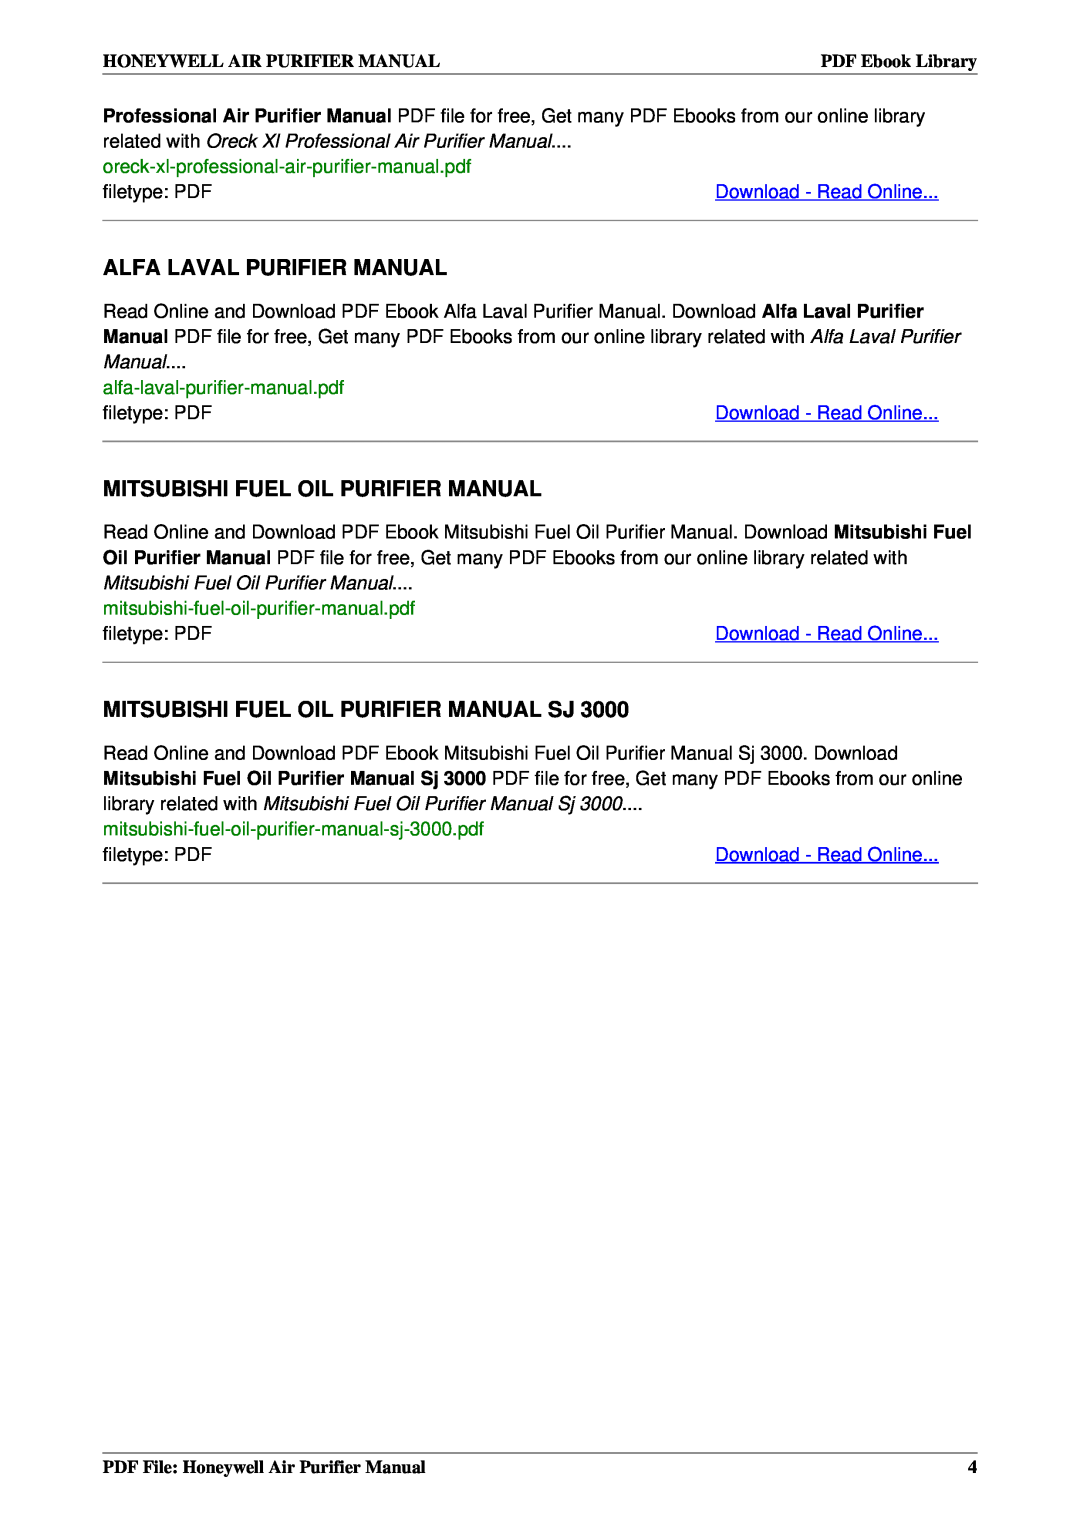 Honeywell 18155, 50300 Alfa Laval Purifier Manual, Mitsubishi Fuel Oil Purifier Manual Sj, Download - Read Online 